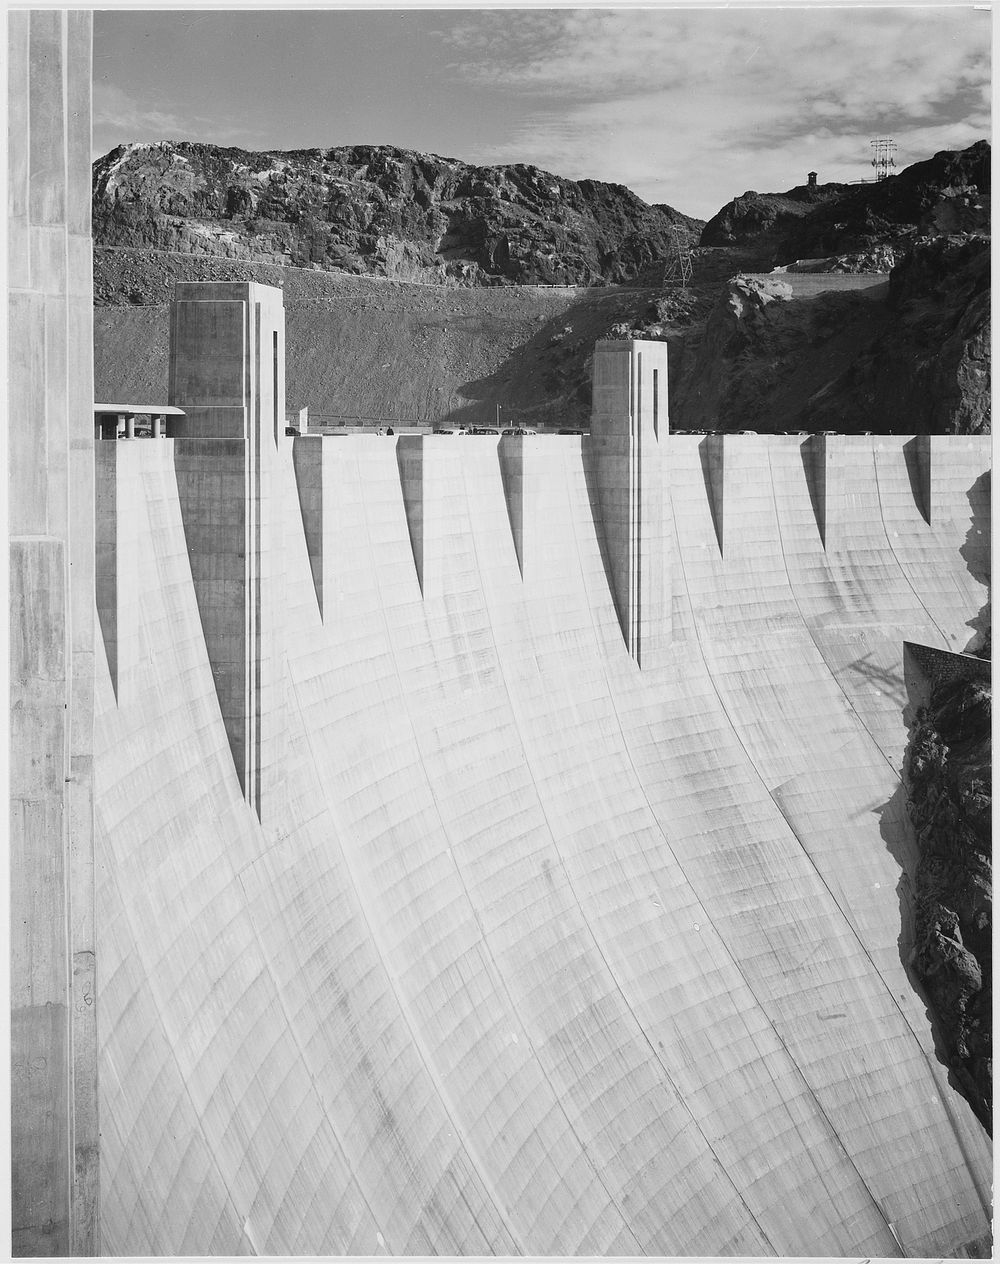 Close-Up Photograph of Boulder Dam. Photographer: Adams, Ansel, 1902-1984. Original public domain image from Flickr